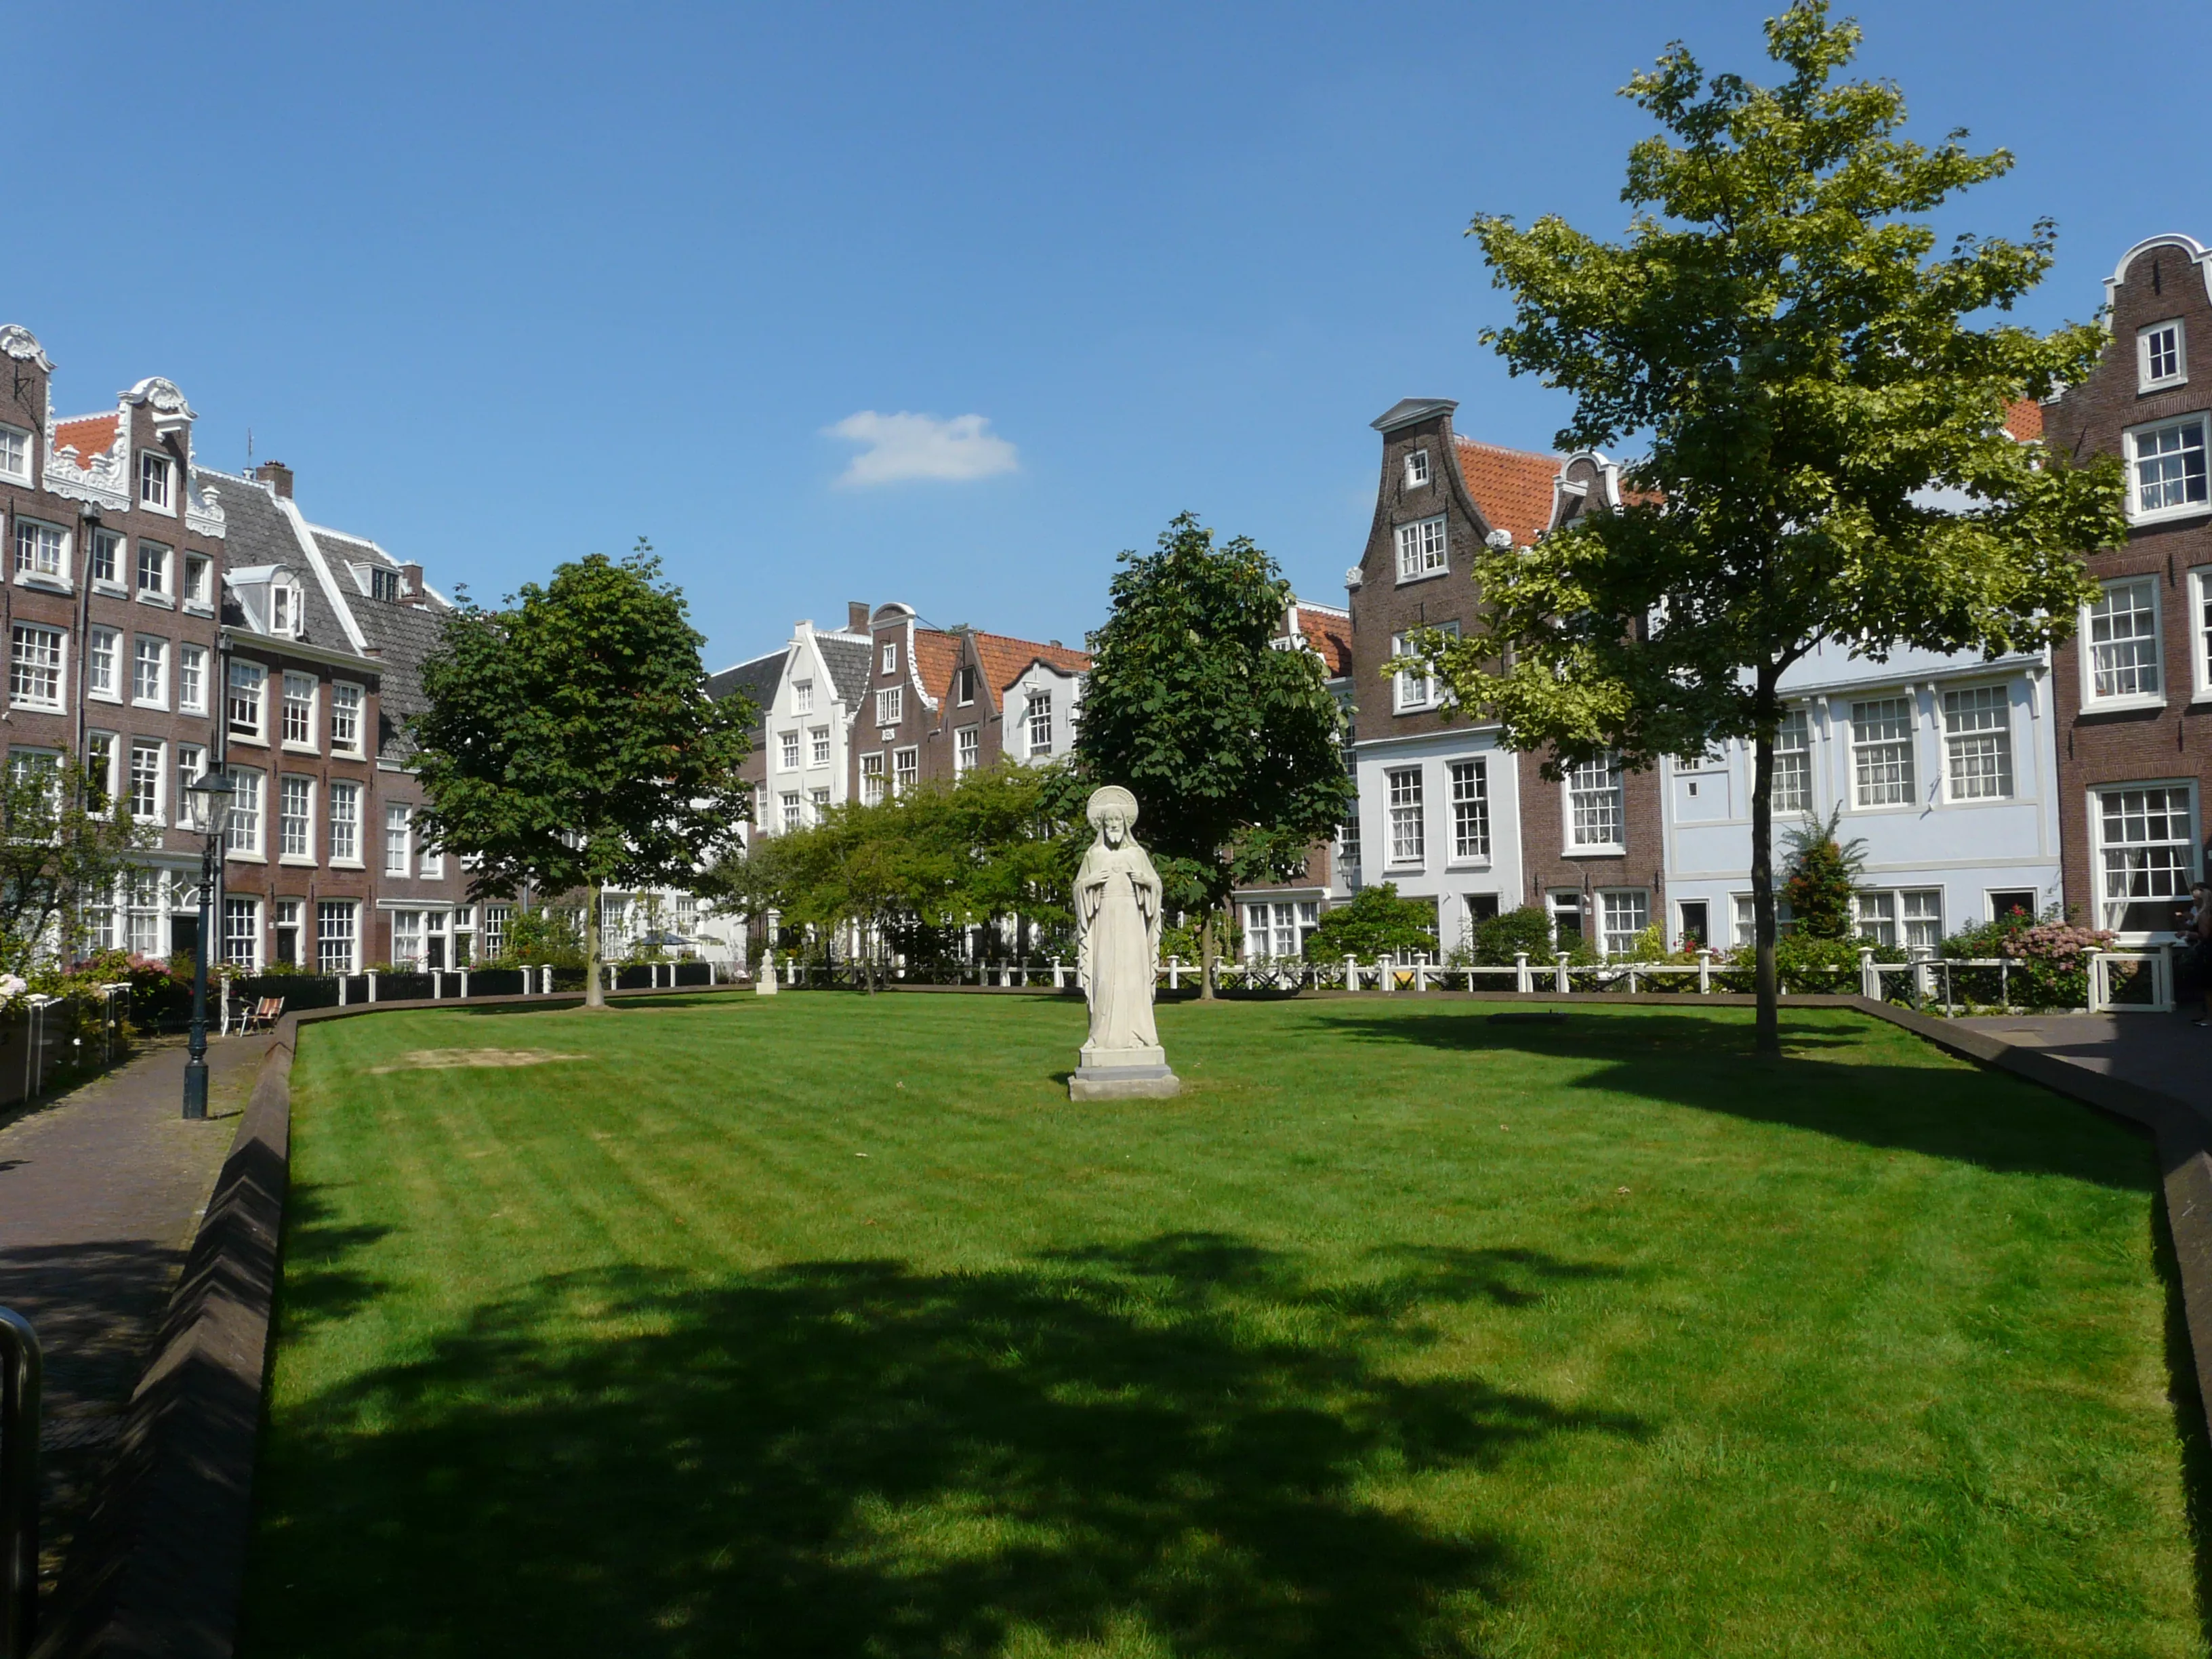 Begeinhof in Netherlands, Europe | Architecture - Rated 3.7